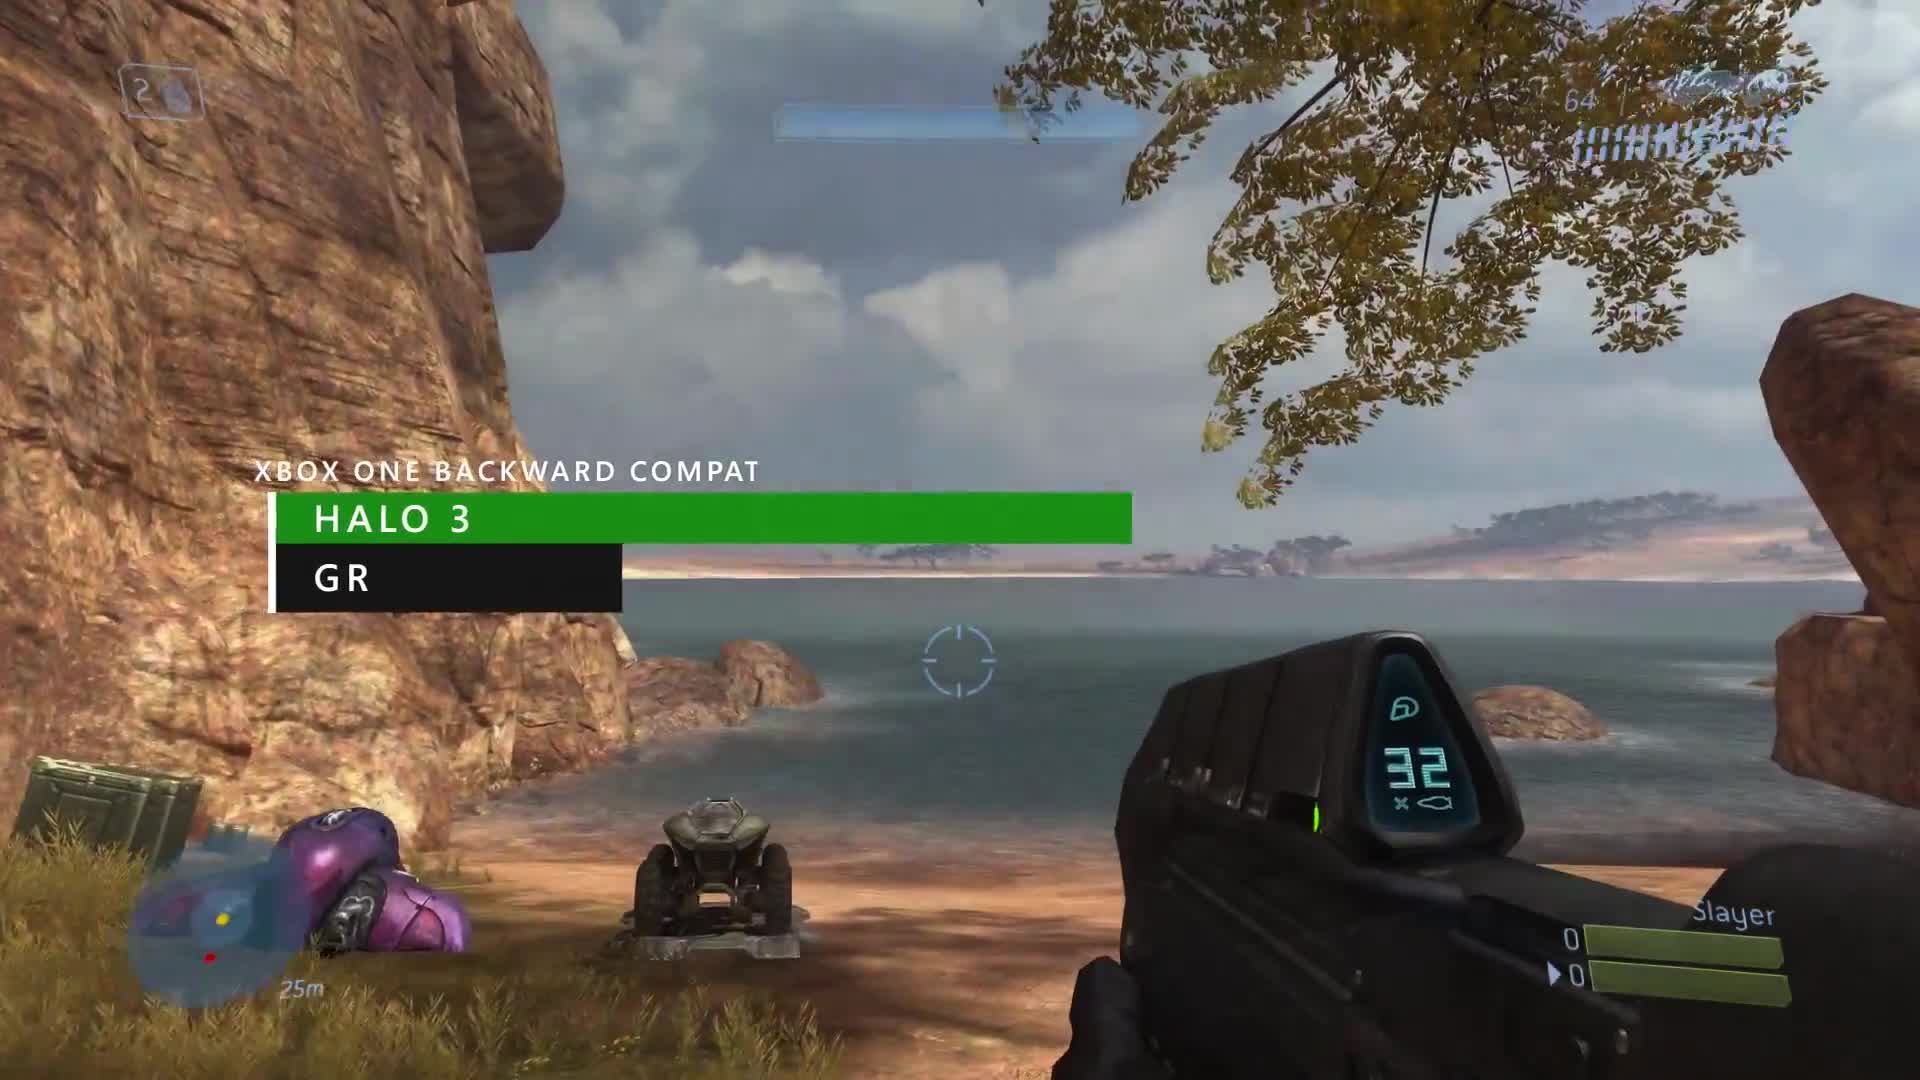 Halo 3 High Ground - Xbox360 vs Xbox One X